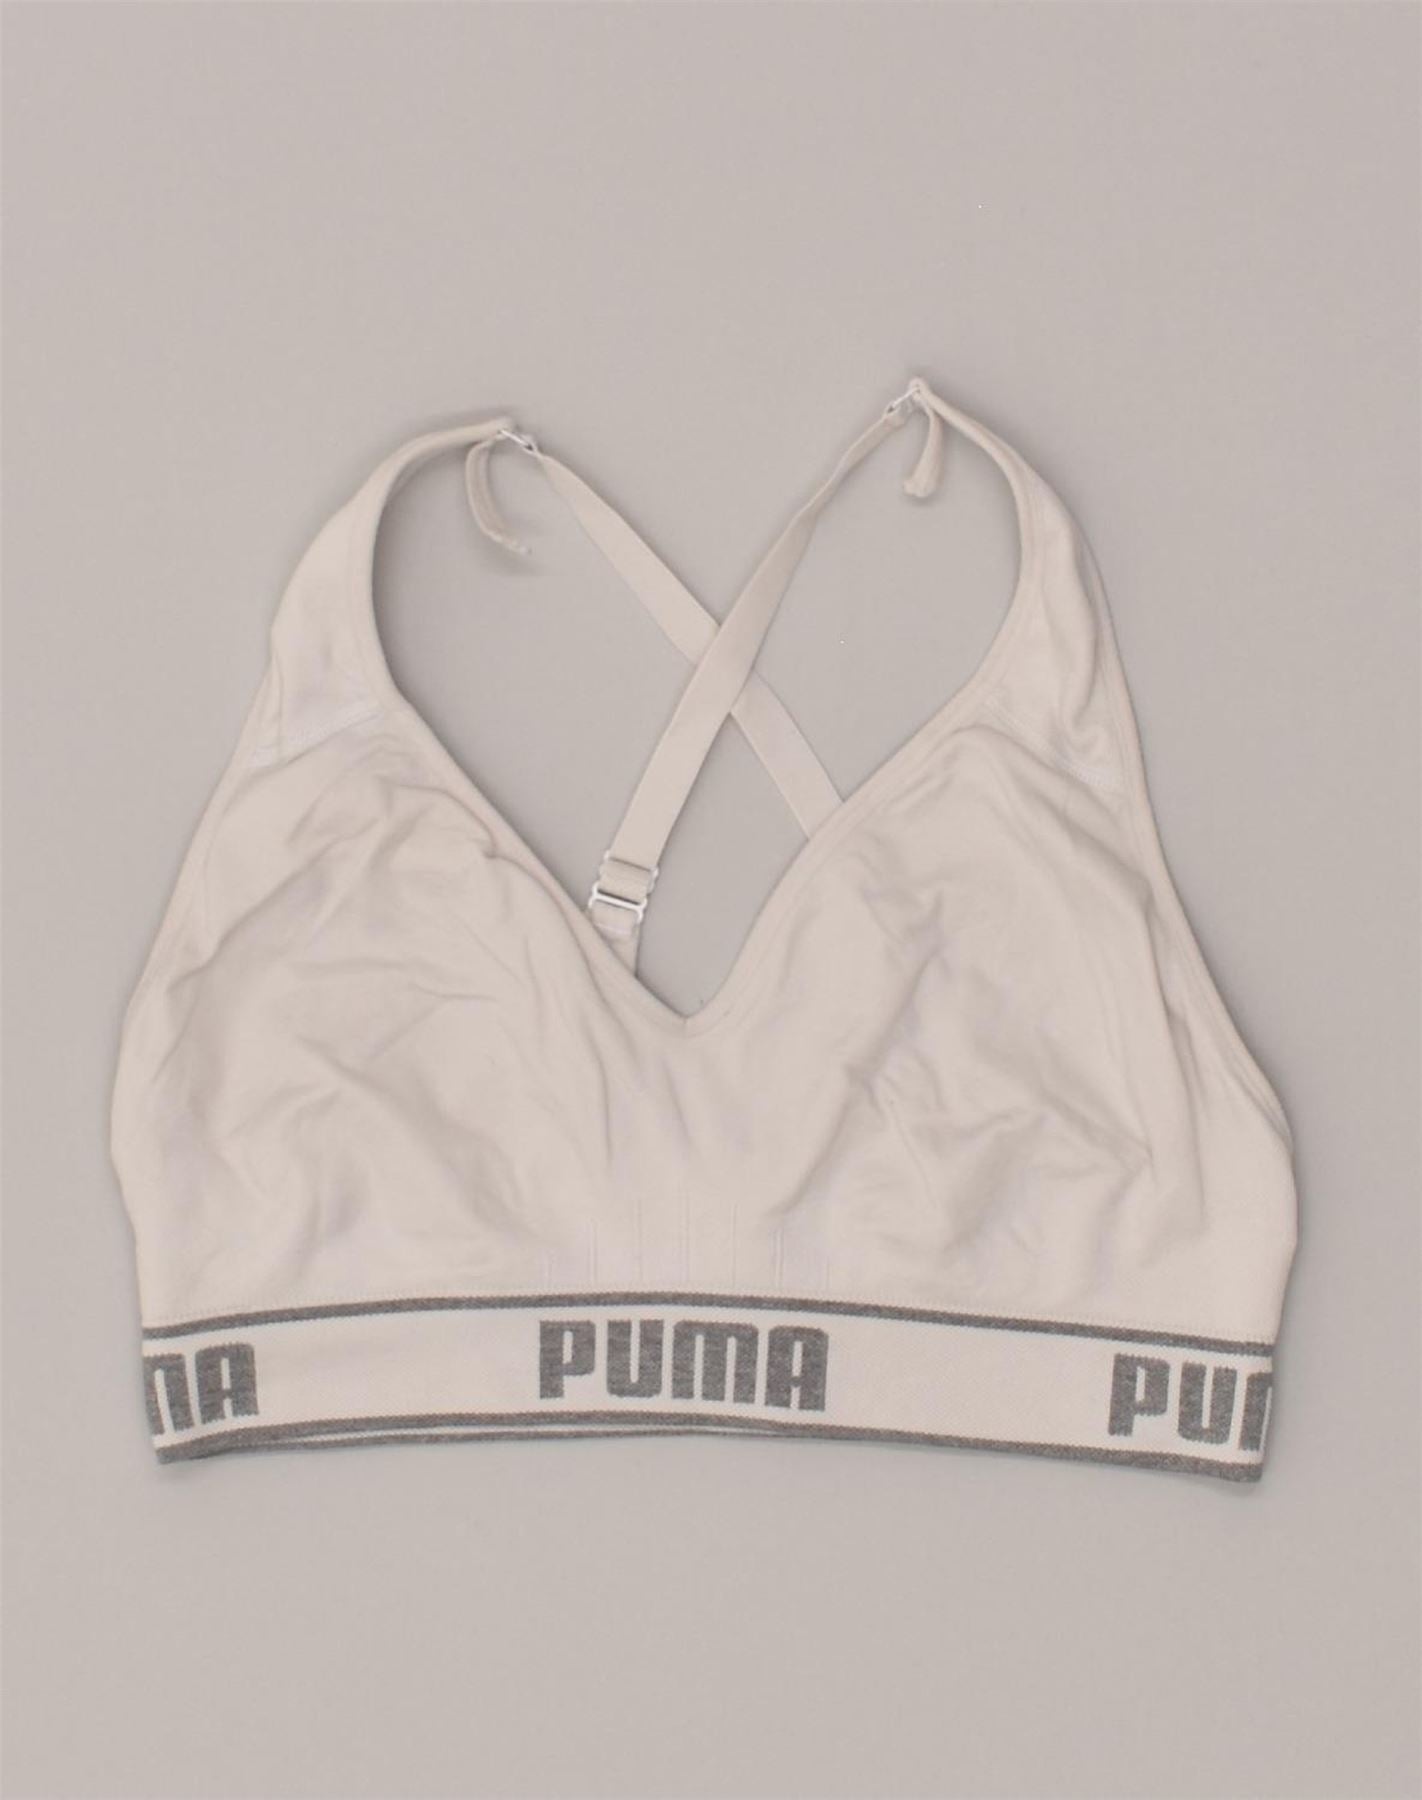 PUMA Womens Sport Bra Top UK 14 Large Grey Nylon, Vintage & Second-Hand  Clothing Online